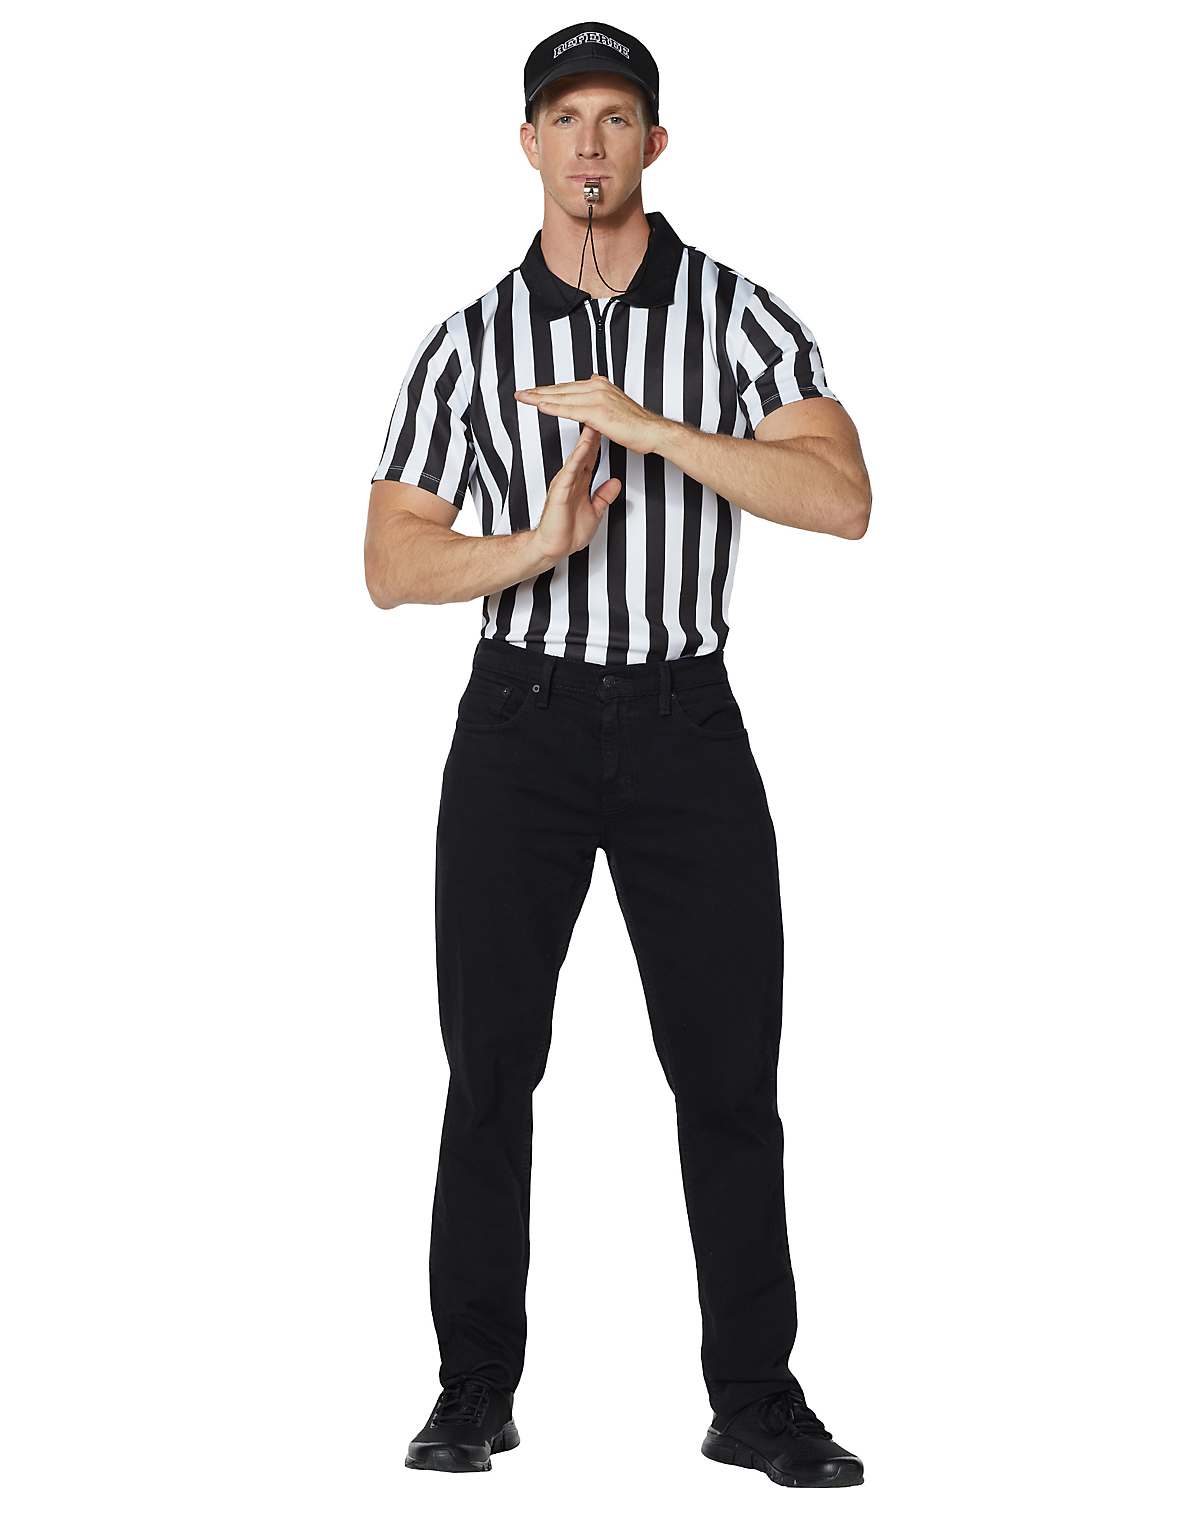 Referee Costume Kit